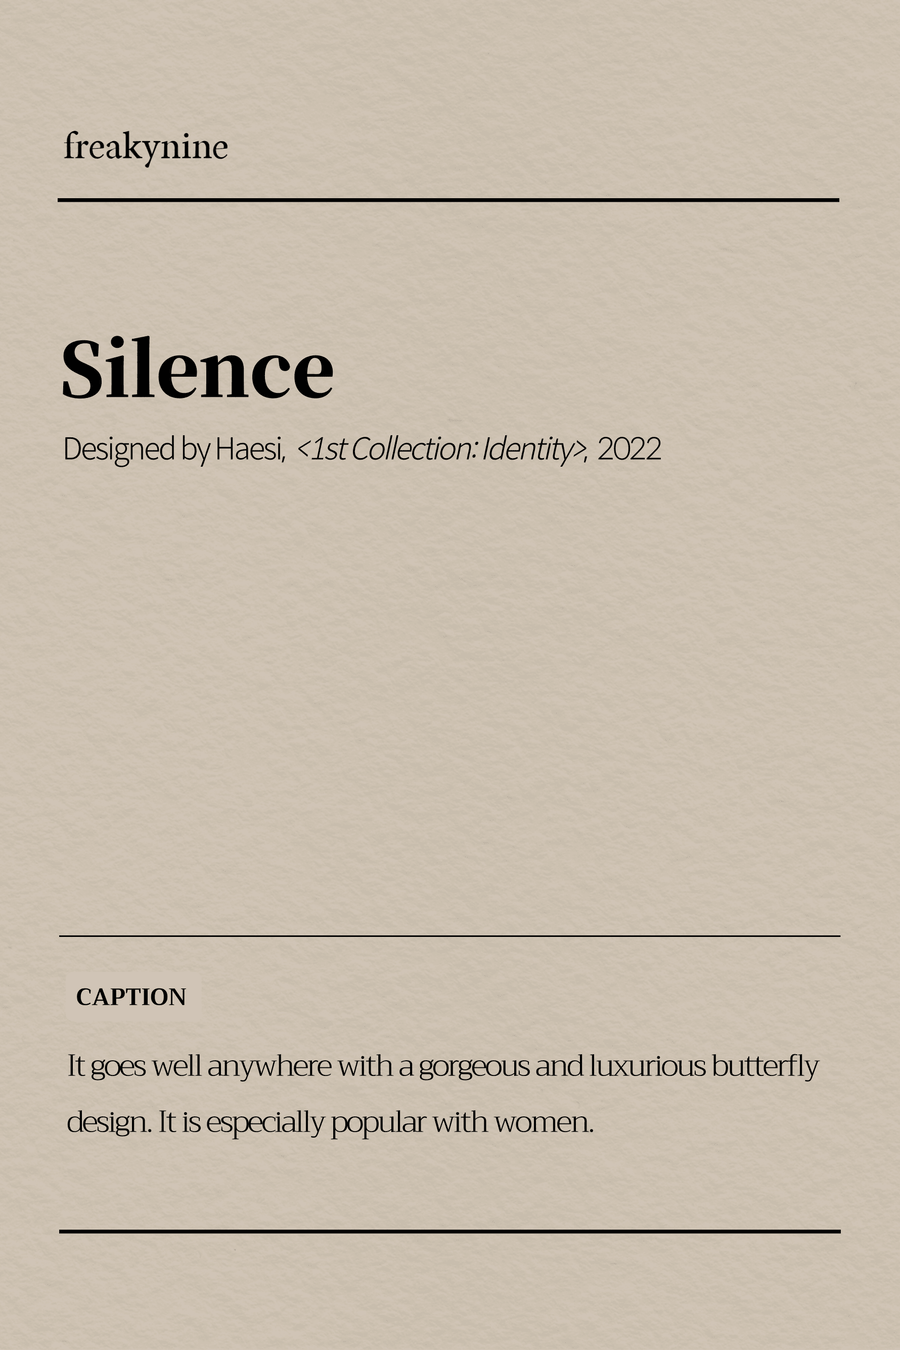 (Haesi) Silence (2EA) - freakynine